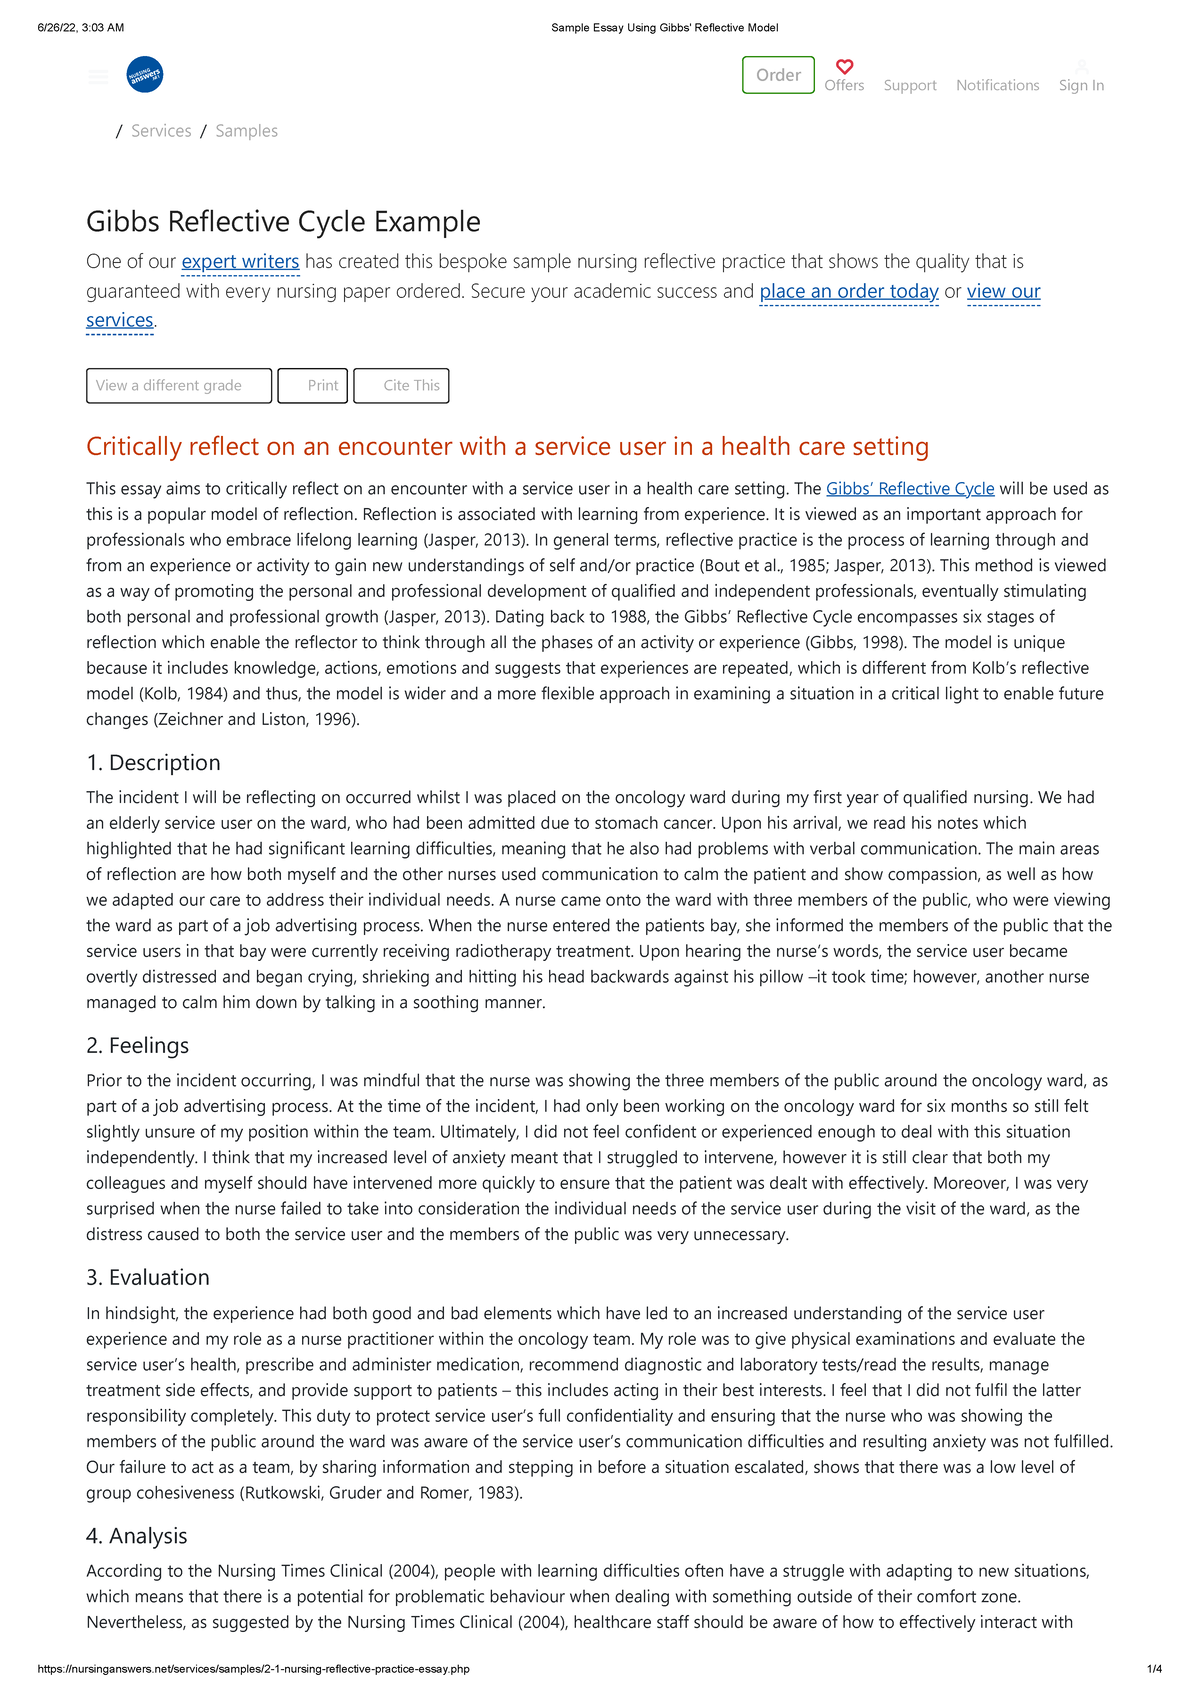 reflective nursing essay using gibbs model